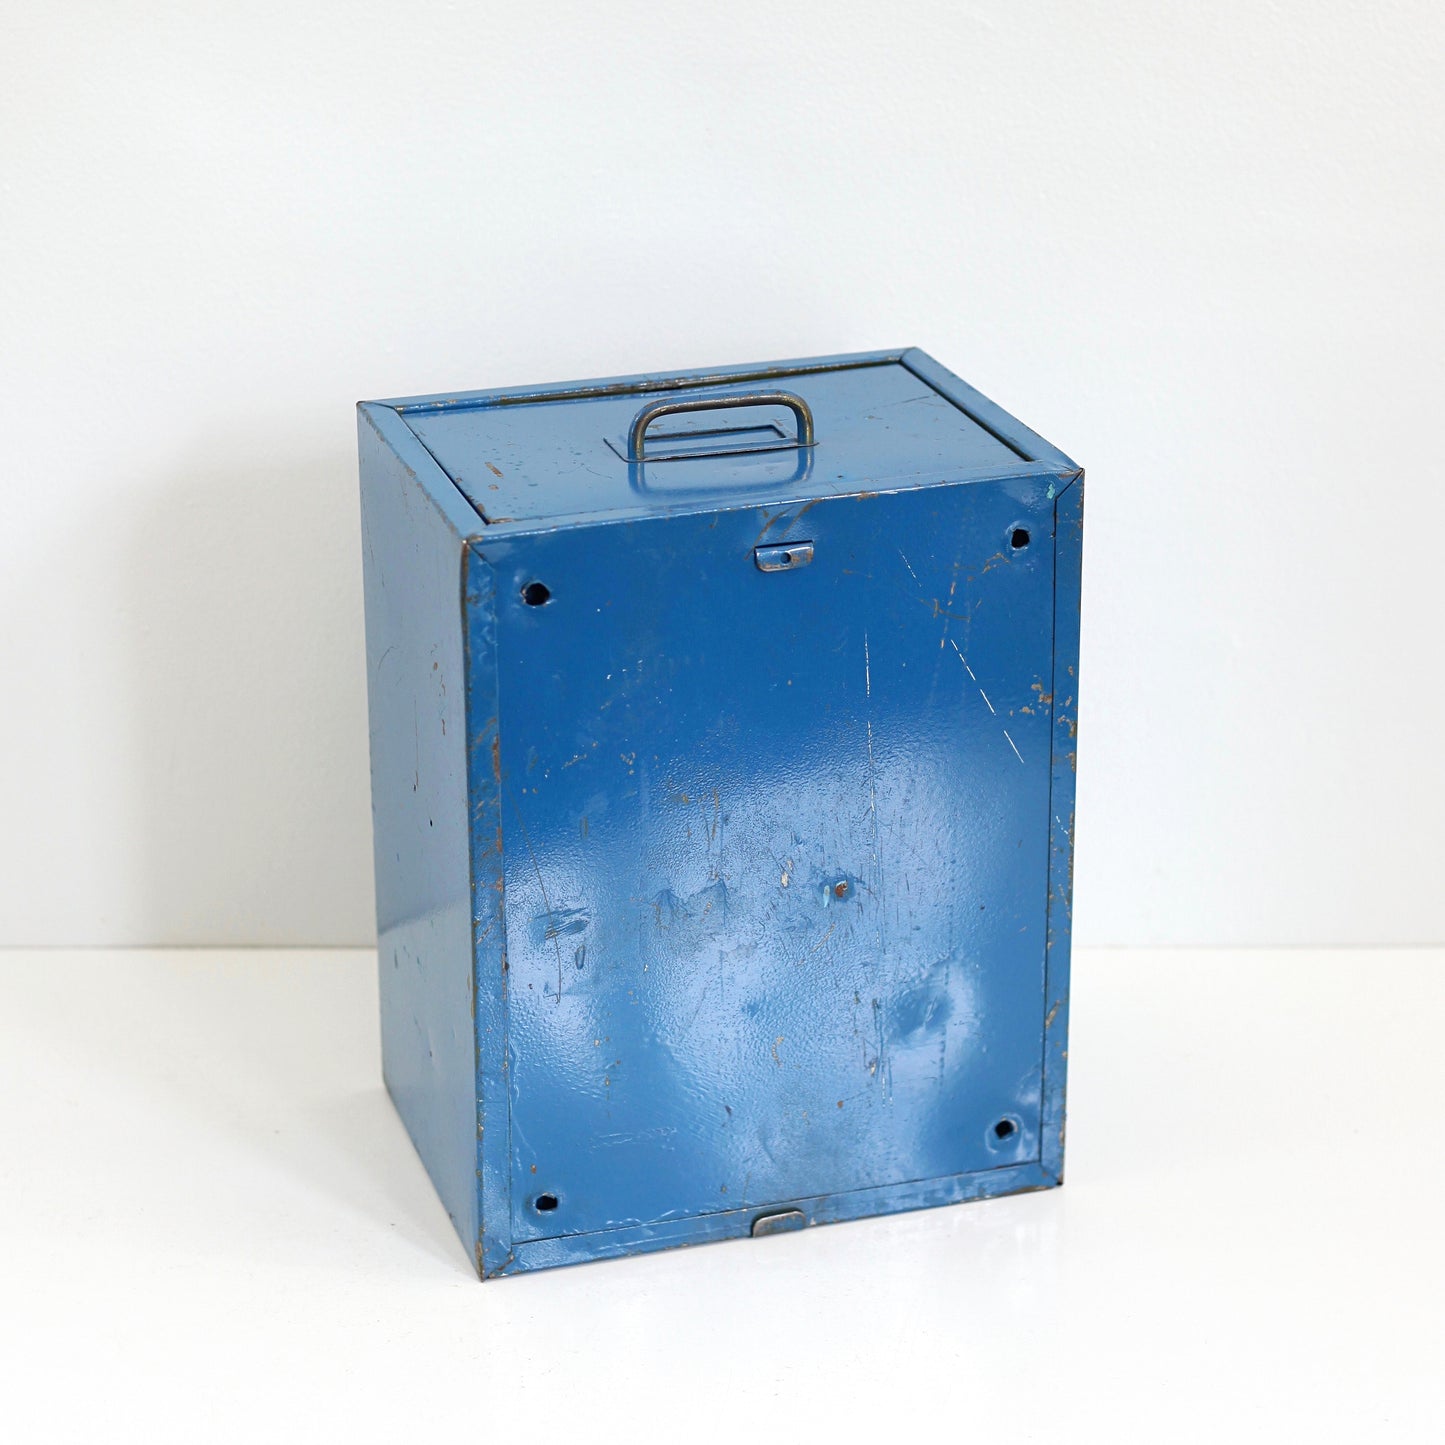 SOLD - Vintage Blue Industrial Metal File Drawer